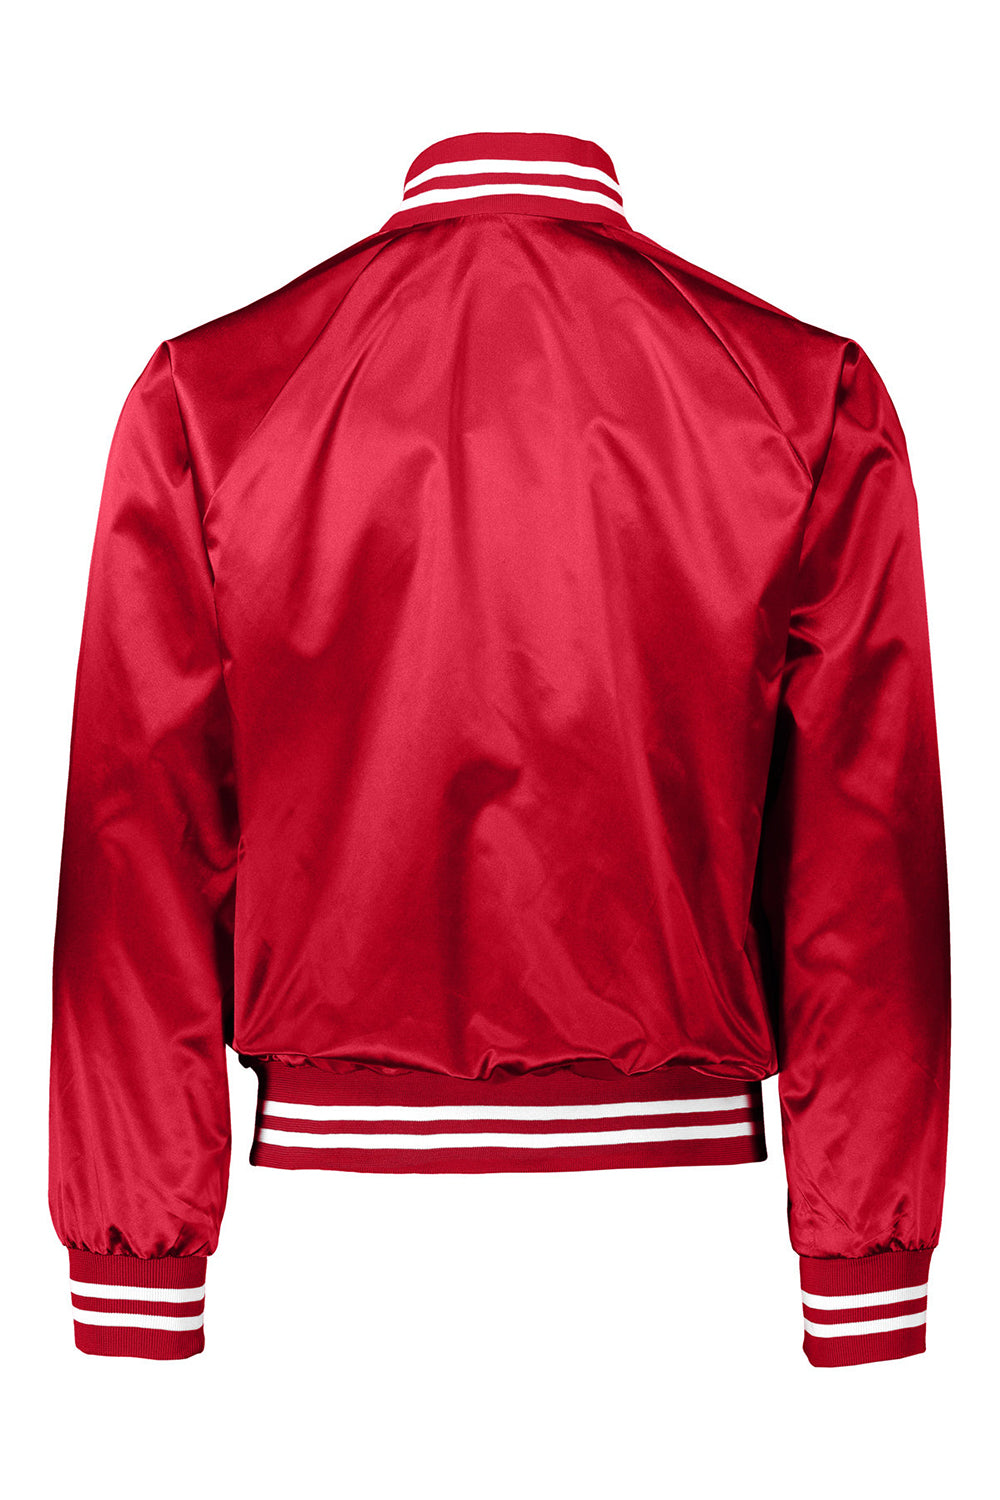 Augusta Sportswear 3610 Mens Water Resistant Snap Front Satin Baseball Jacket w/ Striped Trim Red/White Flat Back